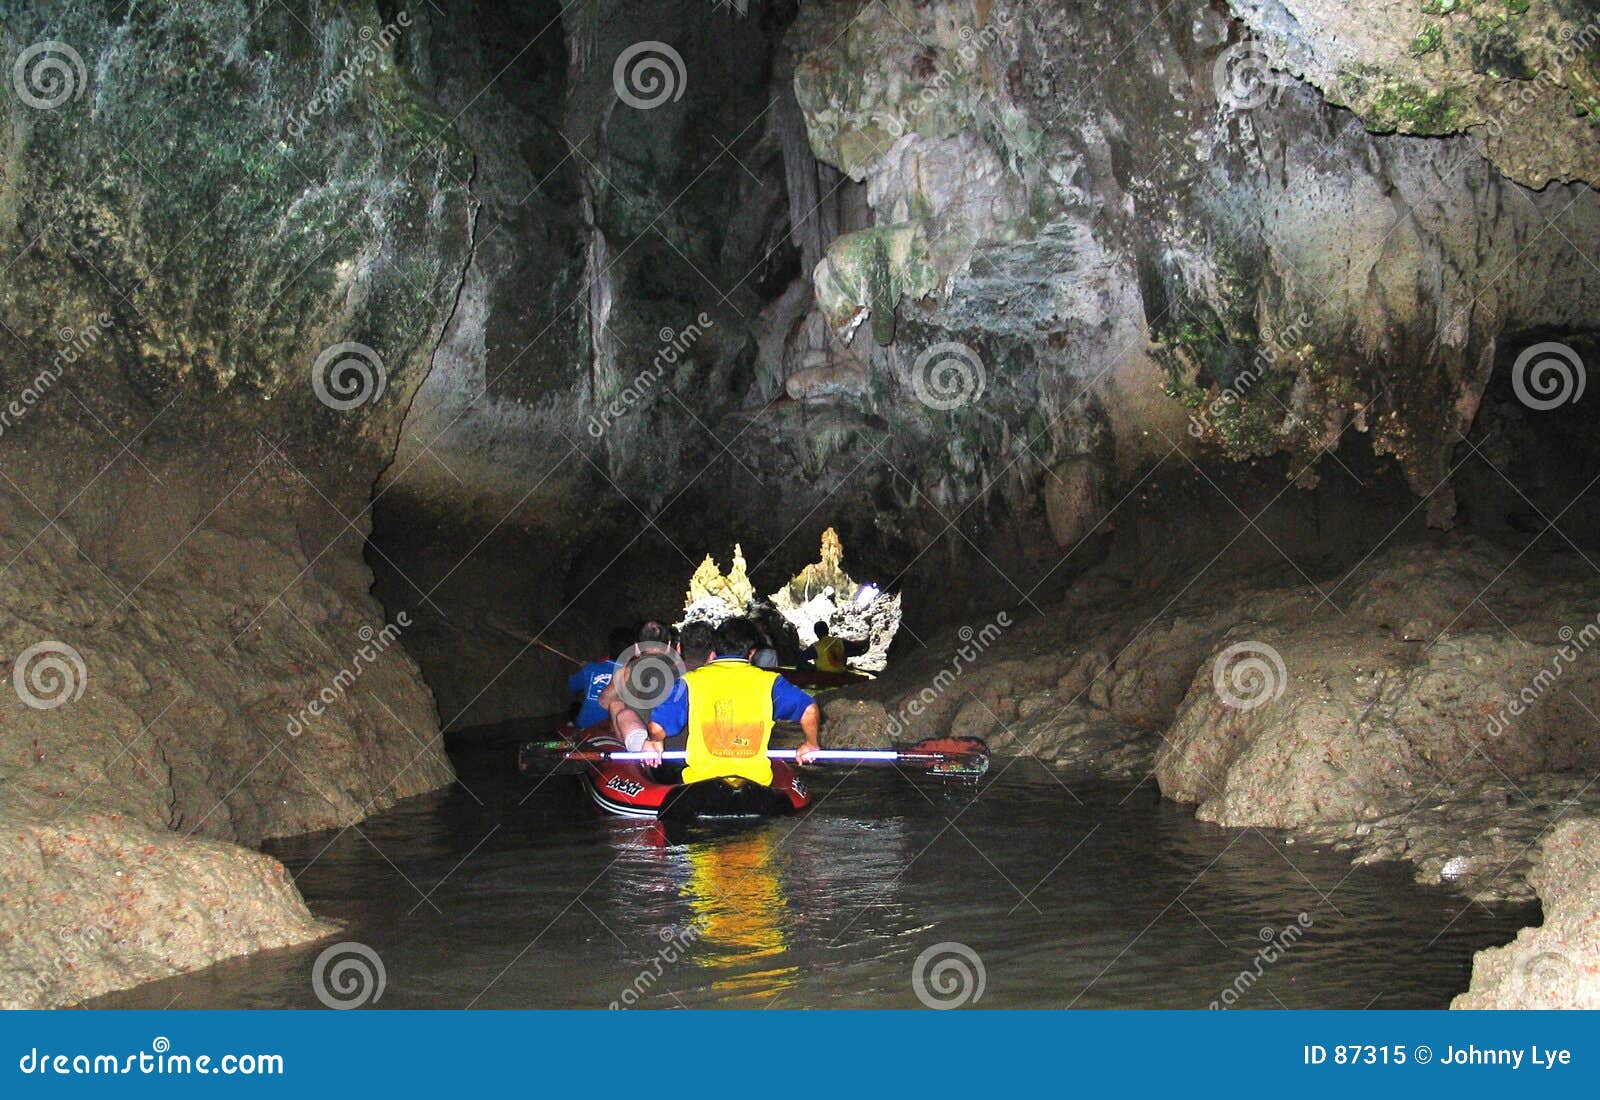 caving with canoe